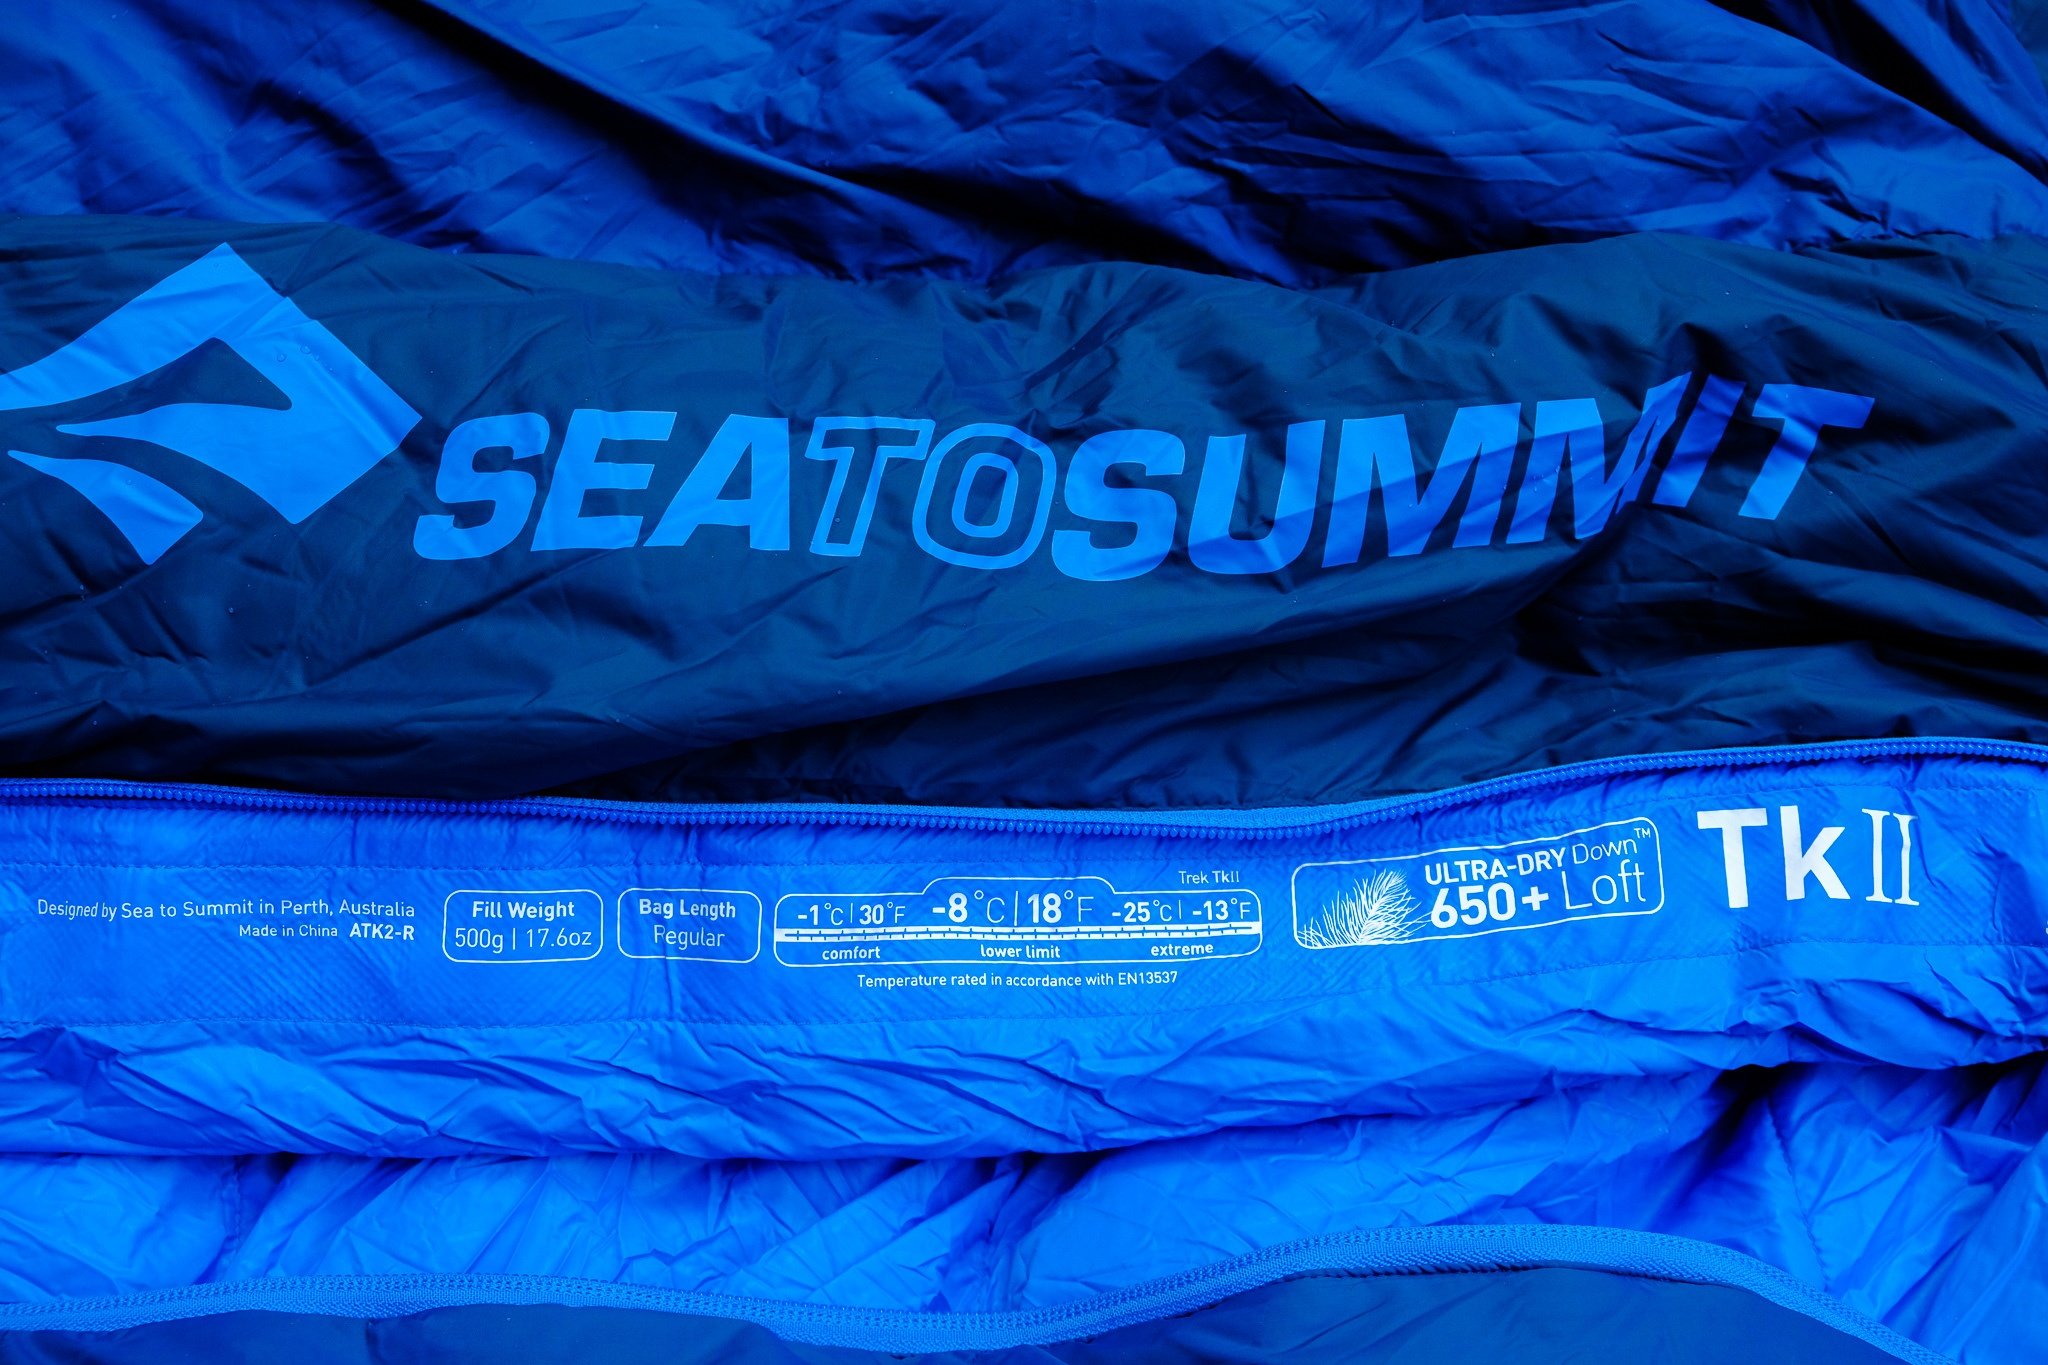 Sea to Summit sleeping bag review